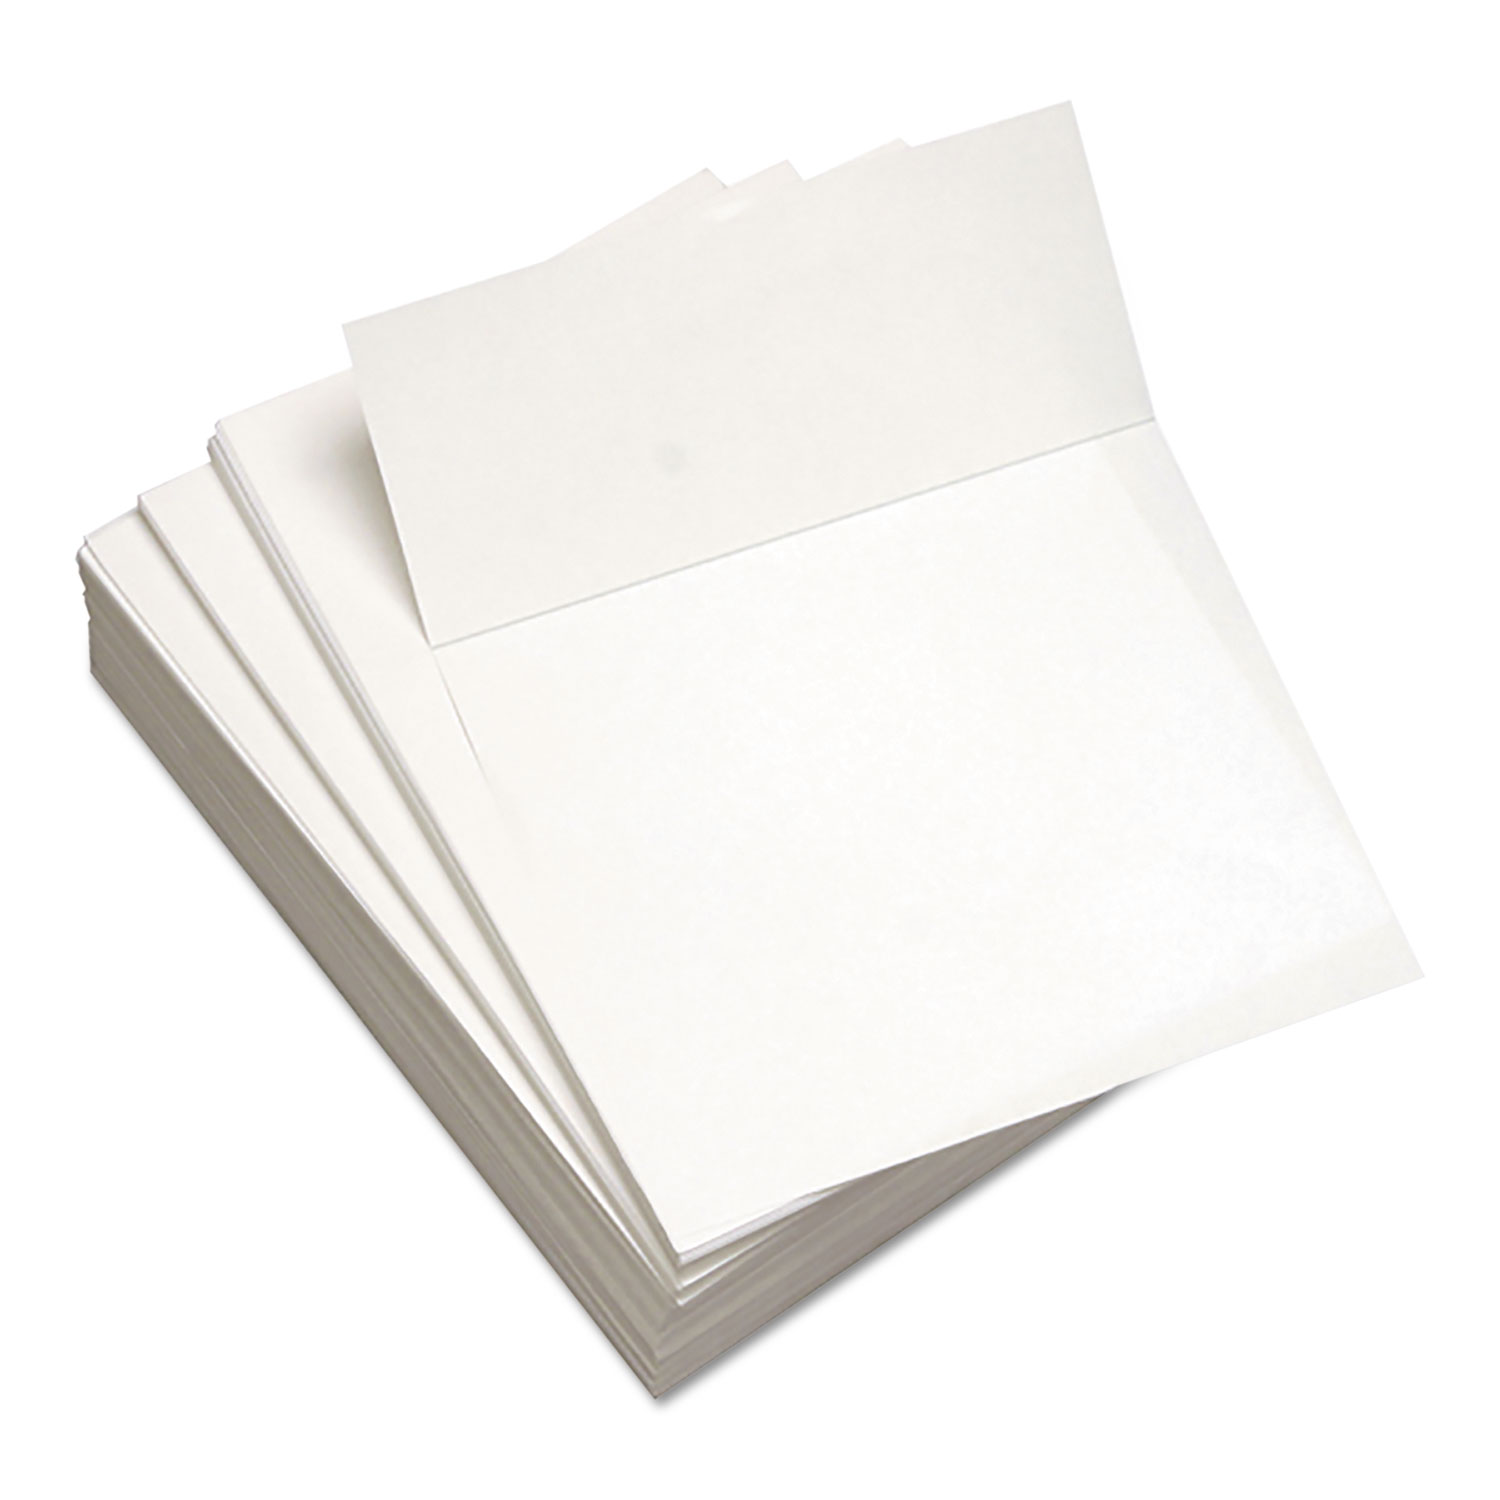  Domtar 851032 Custom Cut-Sheet Copy Paper, 92 Bright, 20lb, 8.5 x 11, White, 500/Ream (DMR851032) 